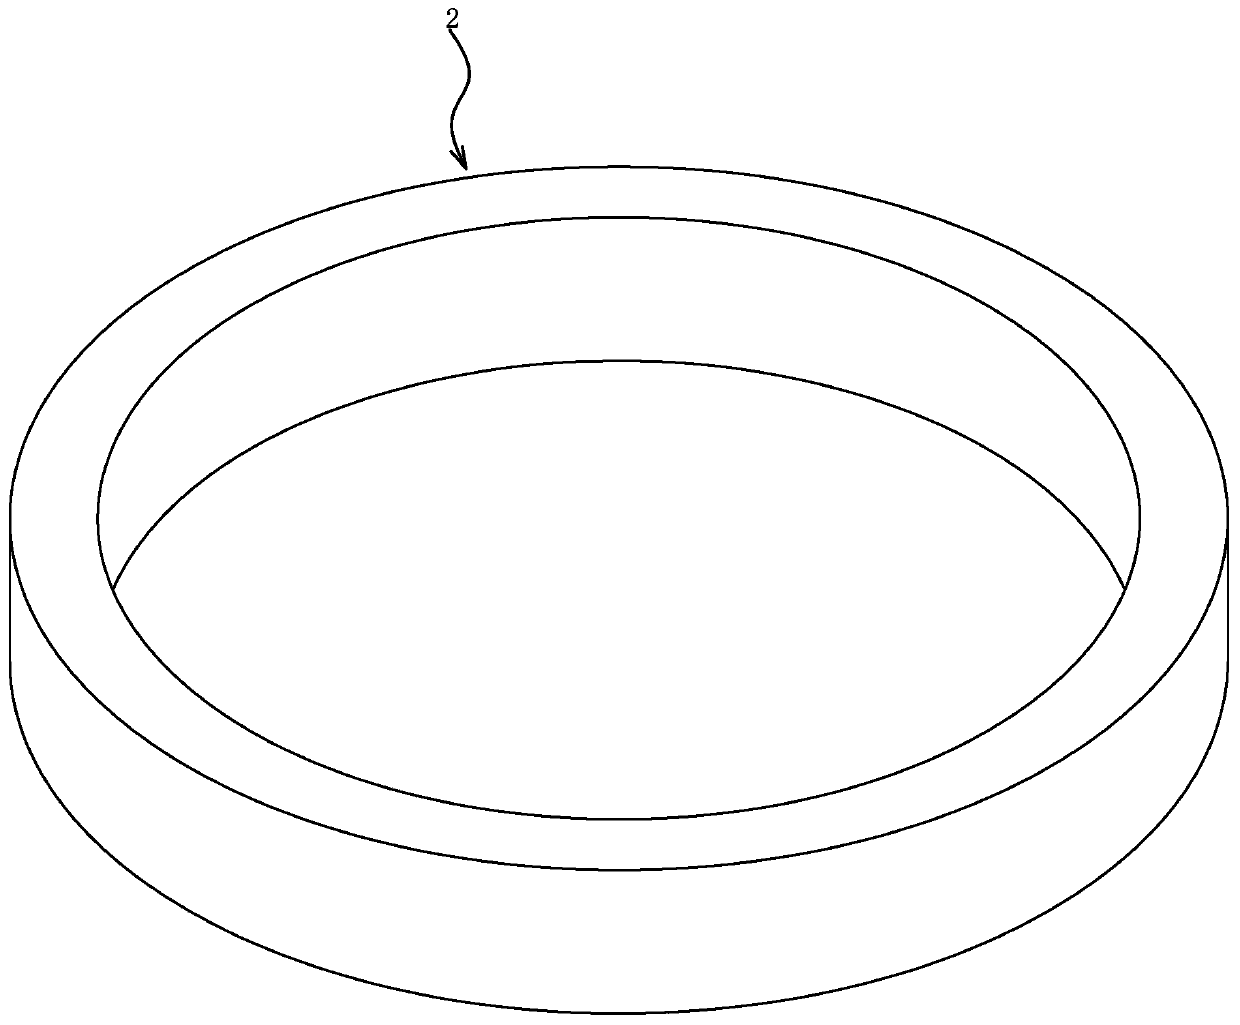 Scroll compressor cross ring manufacturing method